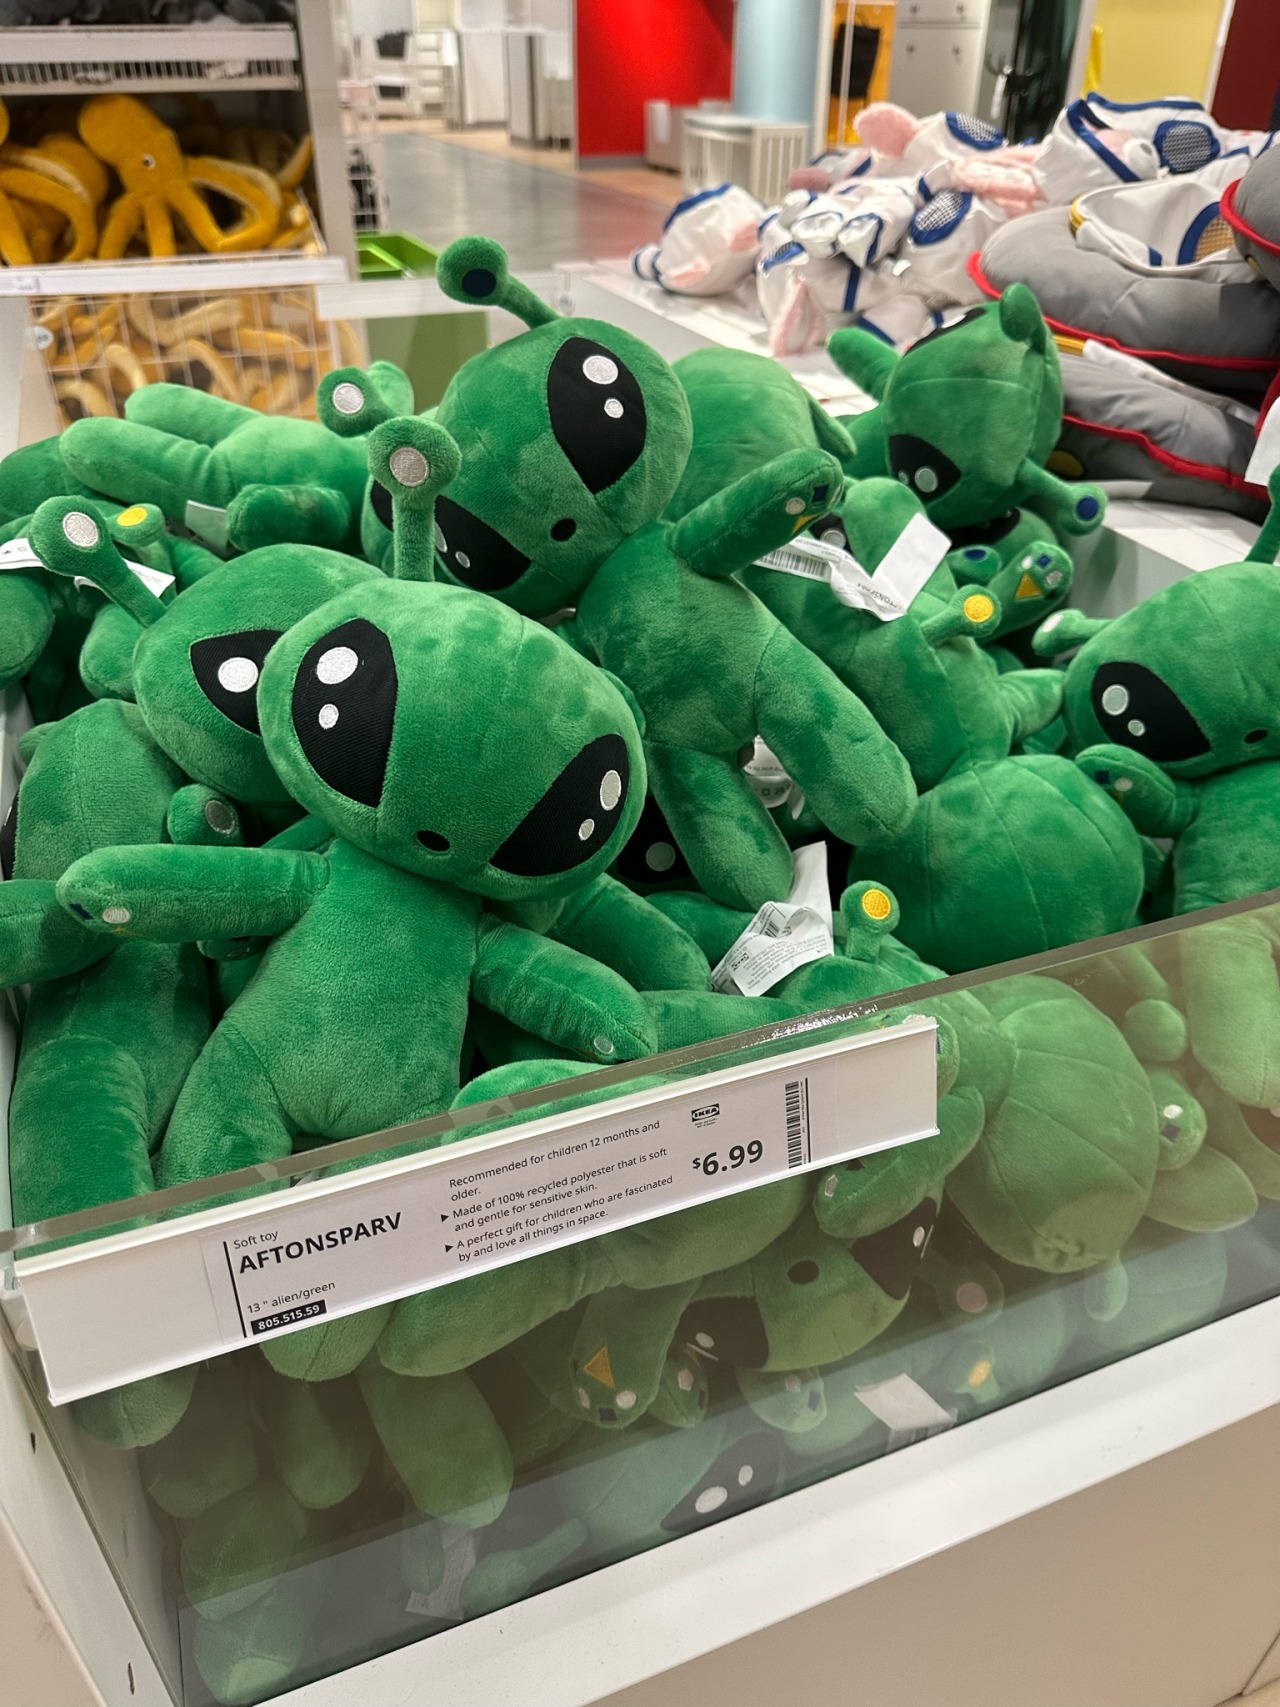 AFTONSPARV Soft toy, alien/green, 13 - IKEA